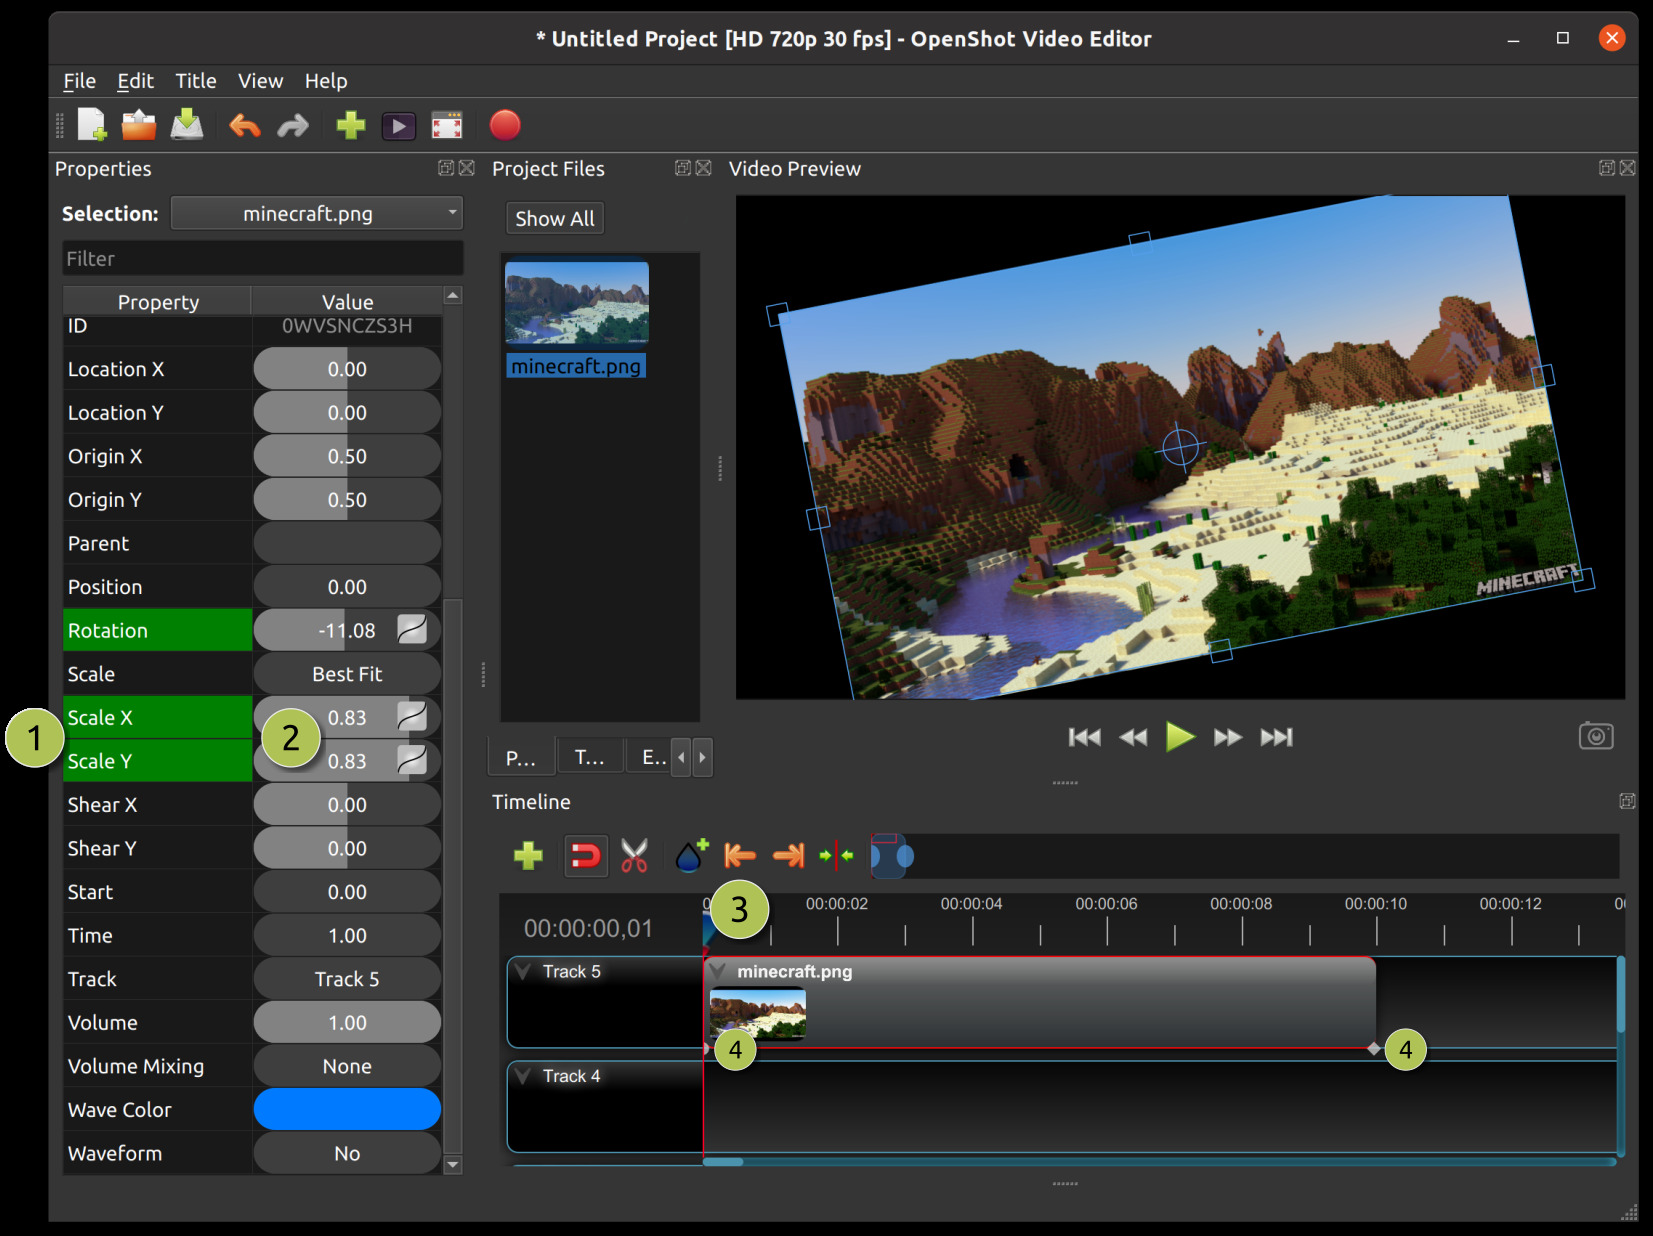 openshot video editor edit duration of titles